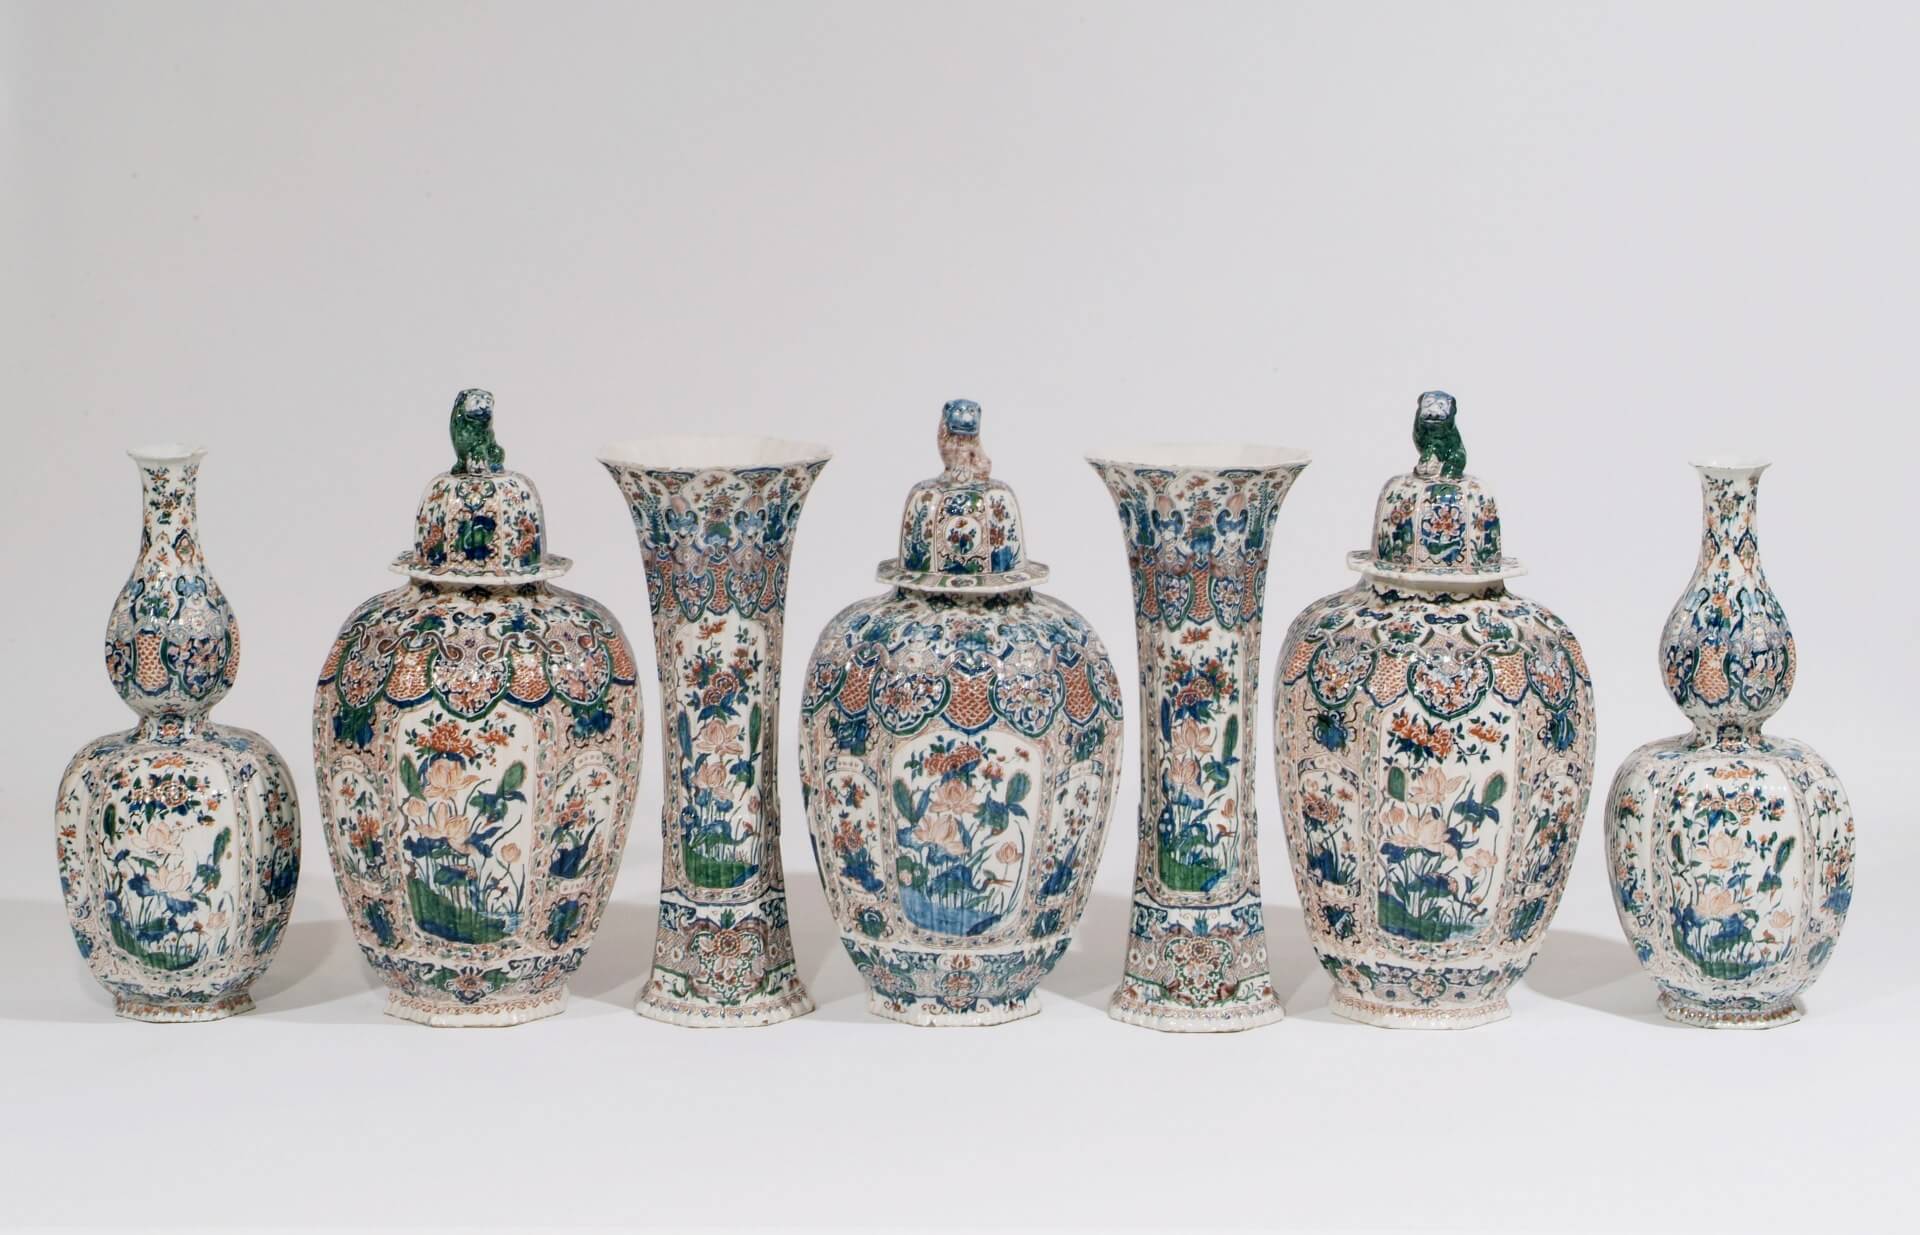 Garniture of polychrome vases antique Delft pottery